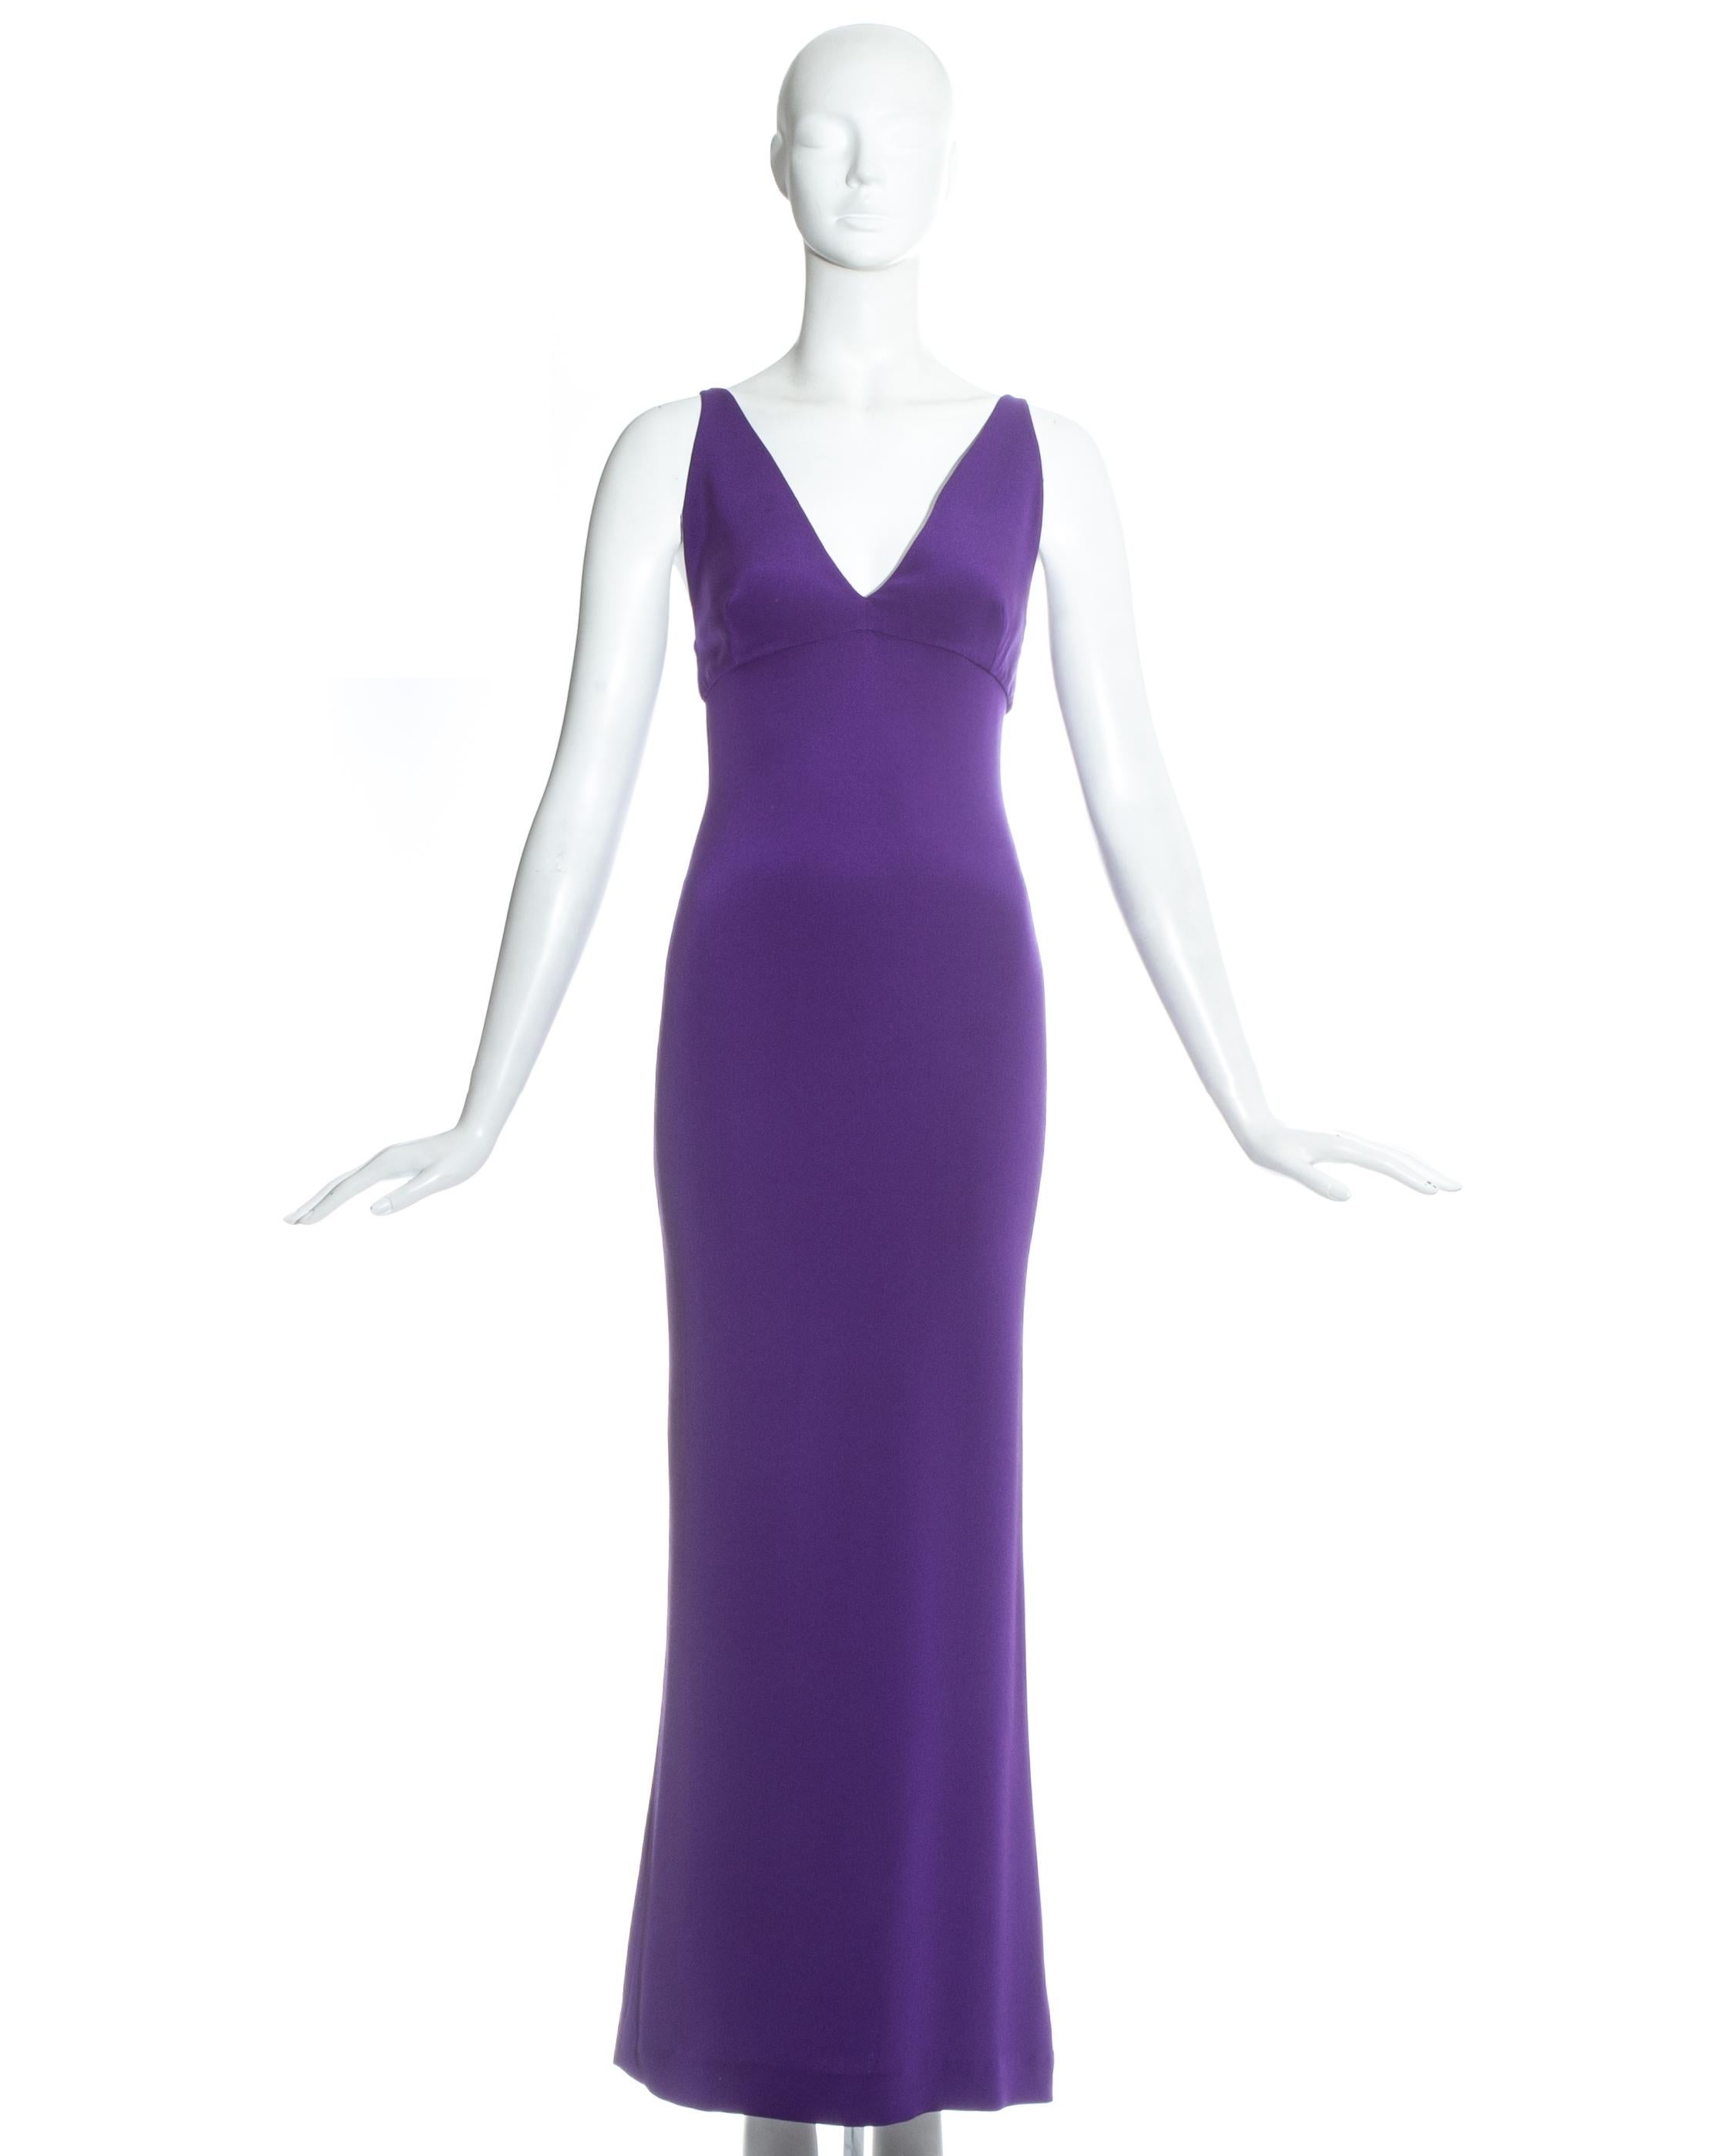 Dolce & Gabbana purple silk evening maxi dress with adjustable black bra straps.

c. 1990s